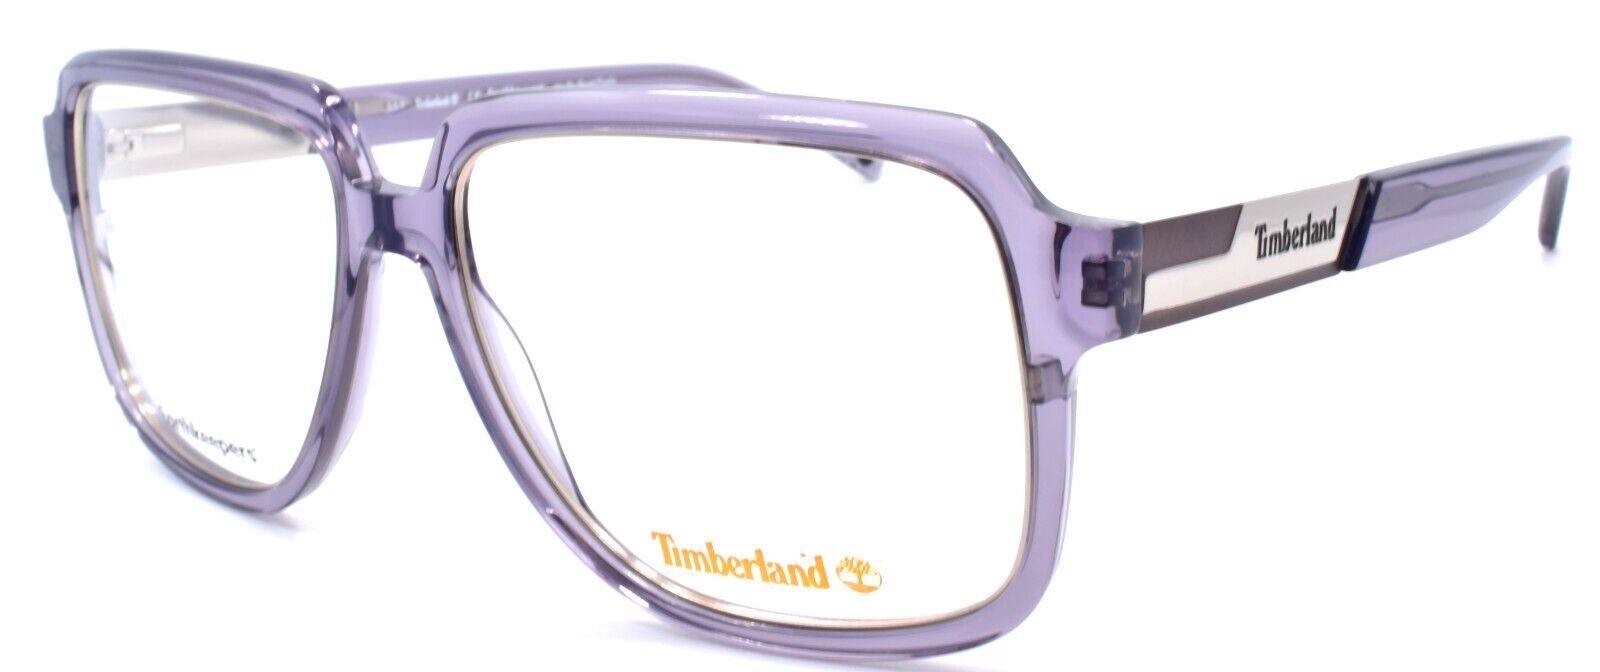 1-TIMBERLAND TB1703 020 Men's Eyeglasses Frames Large 62-17-155 Grey Crystal-889214202475-IKSpecs